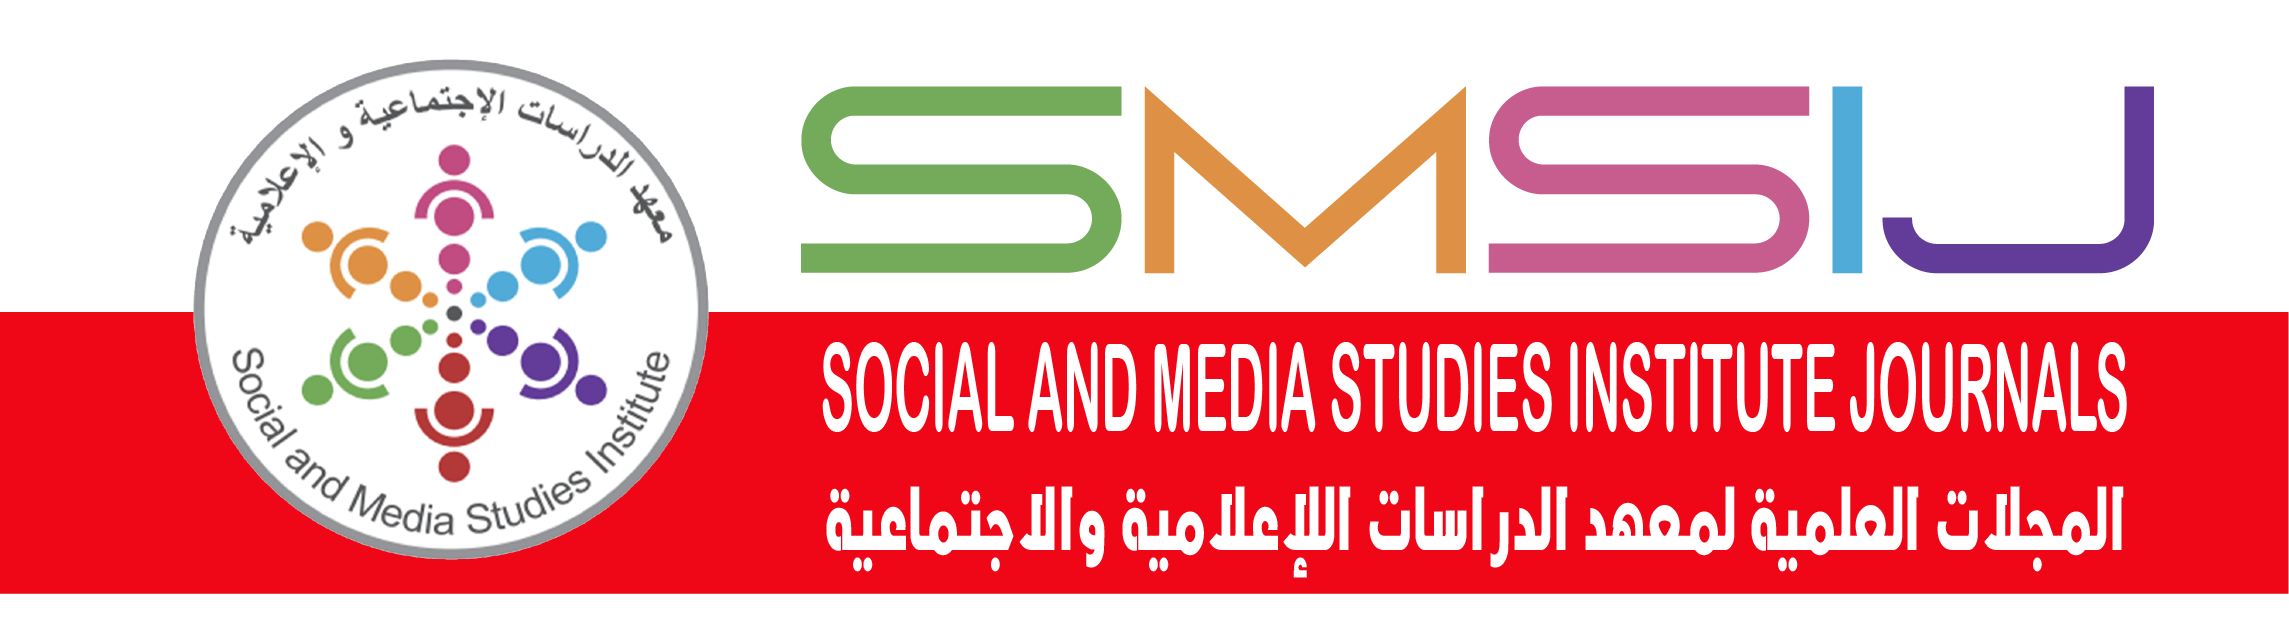 SOCIAL AND MEDIA STUDIES INSTITUTE JOURNALS